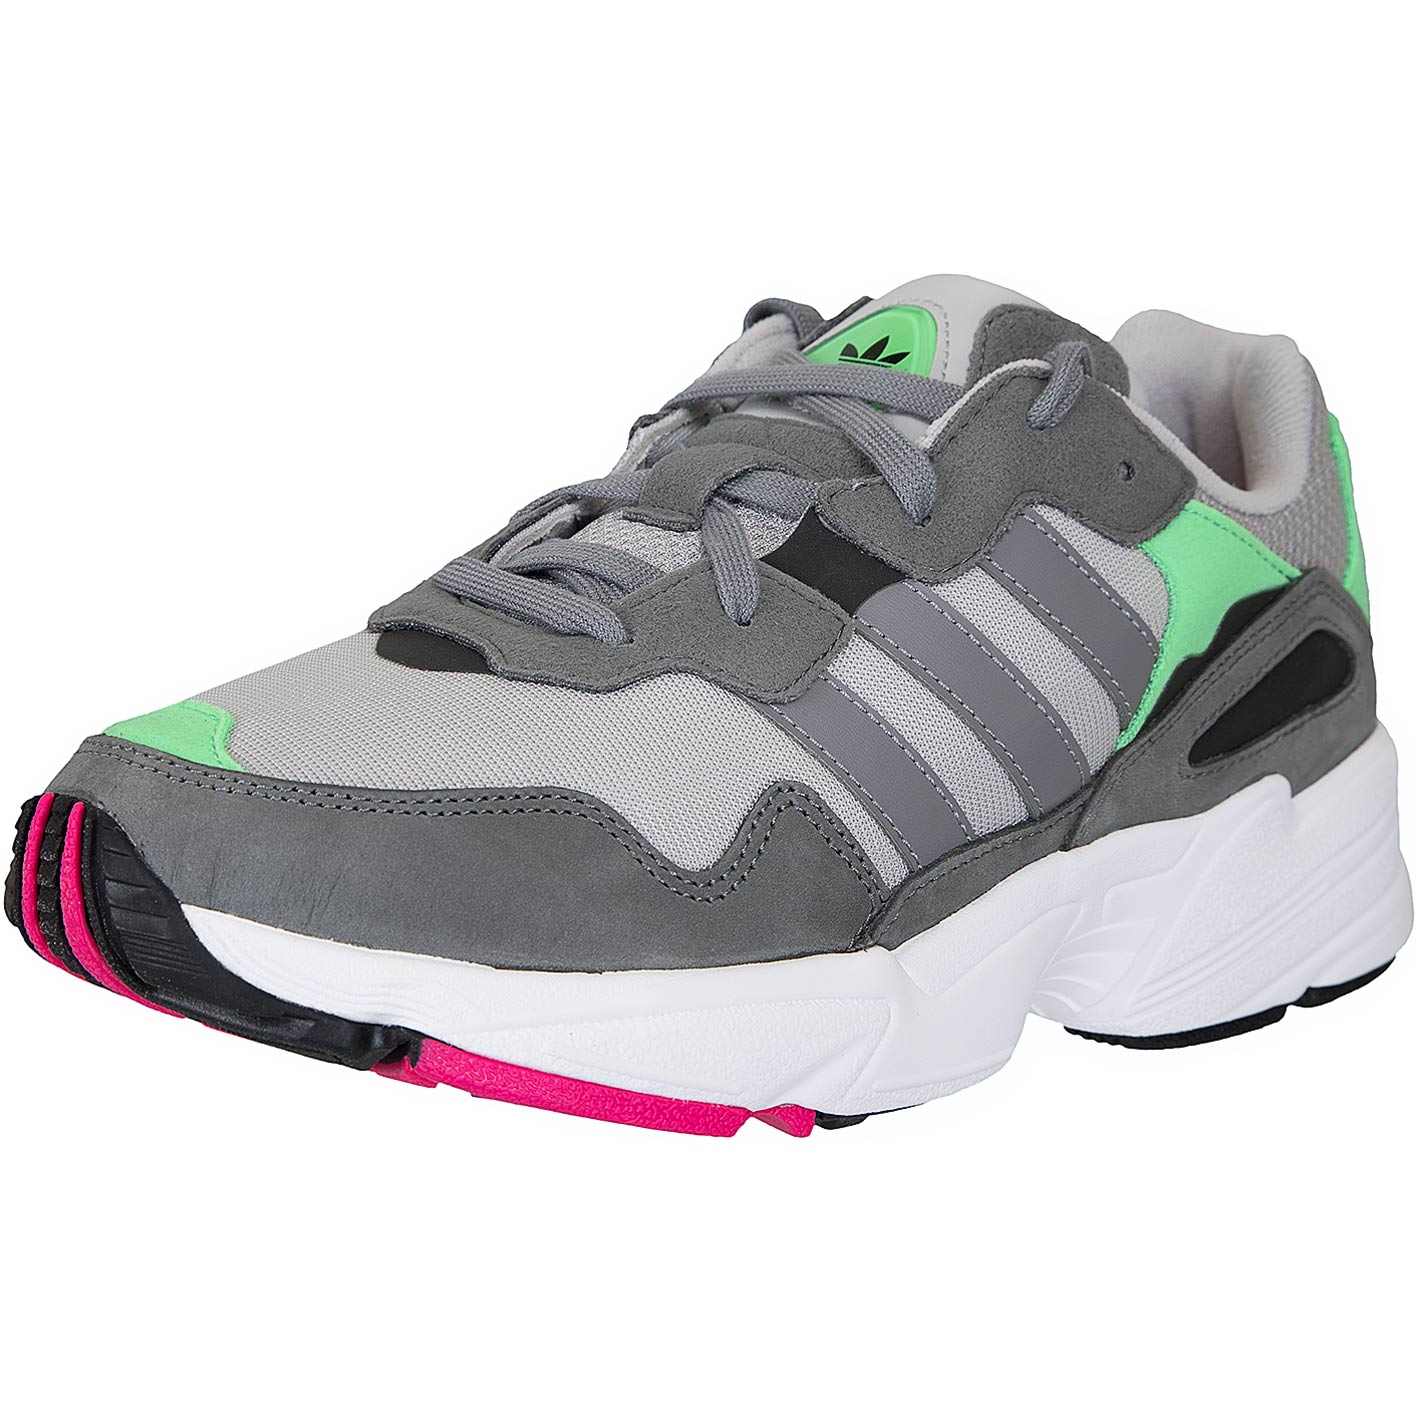 ☆ Adidas Originals Sneaker Yung-96 grau/pink/grün - hier bestellen!